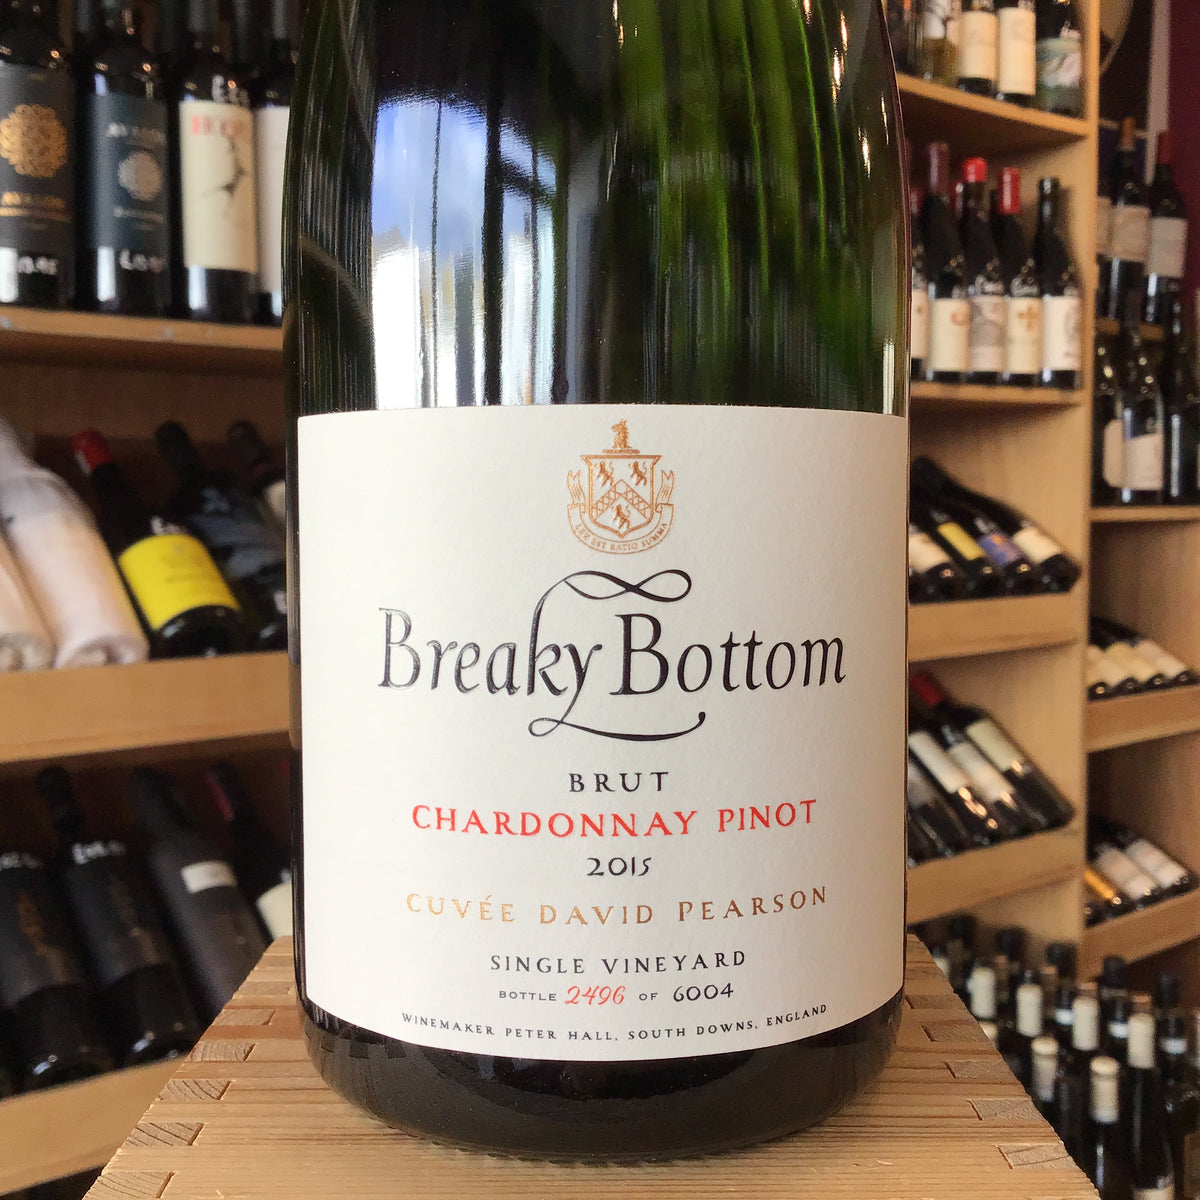 Breaky Bottom Cuvee David Pearson 2015 - Butlers Wine Cellar Brighton